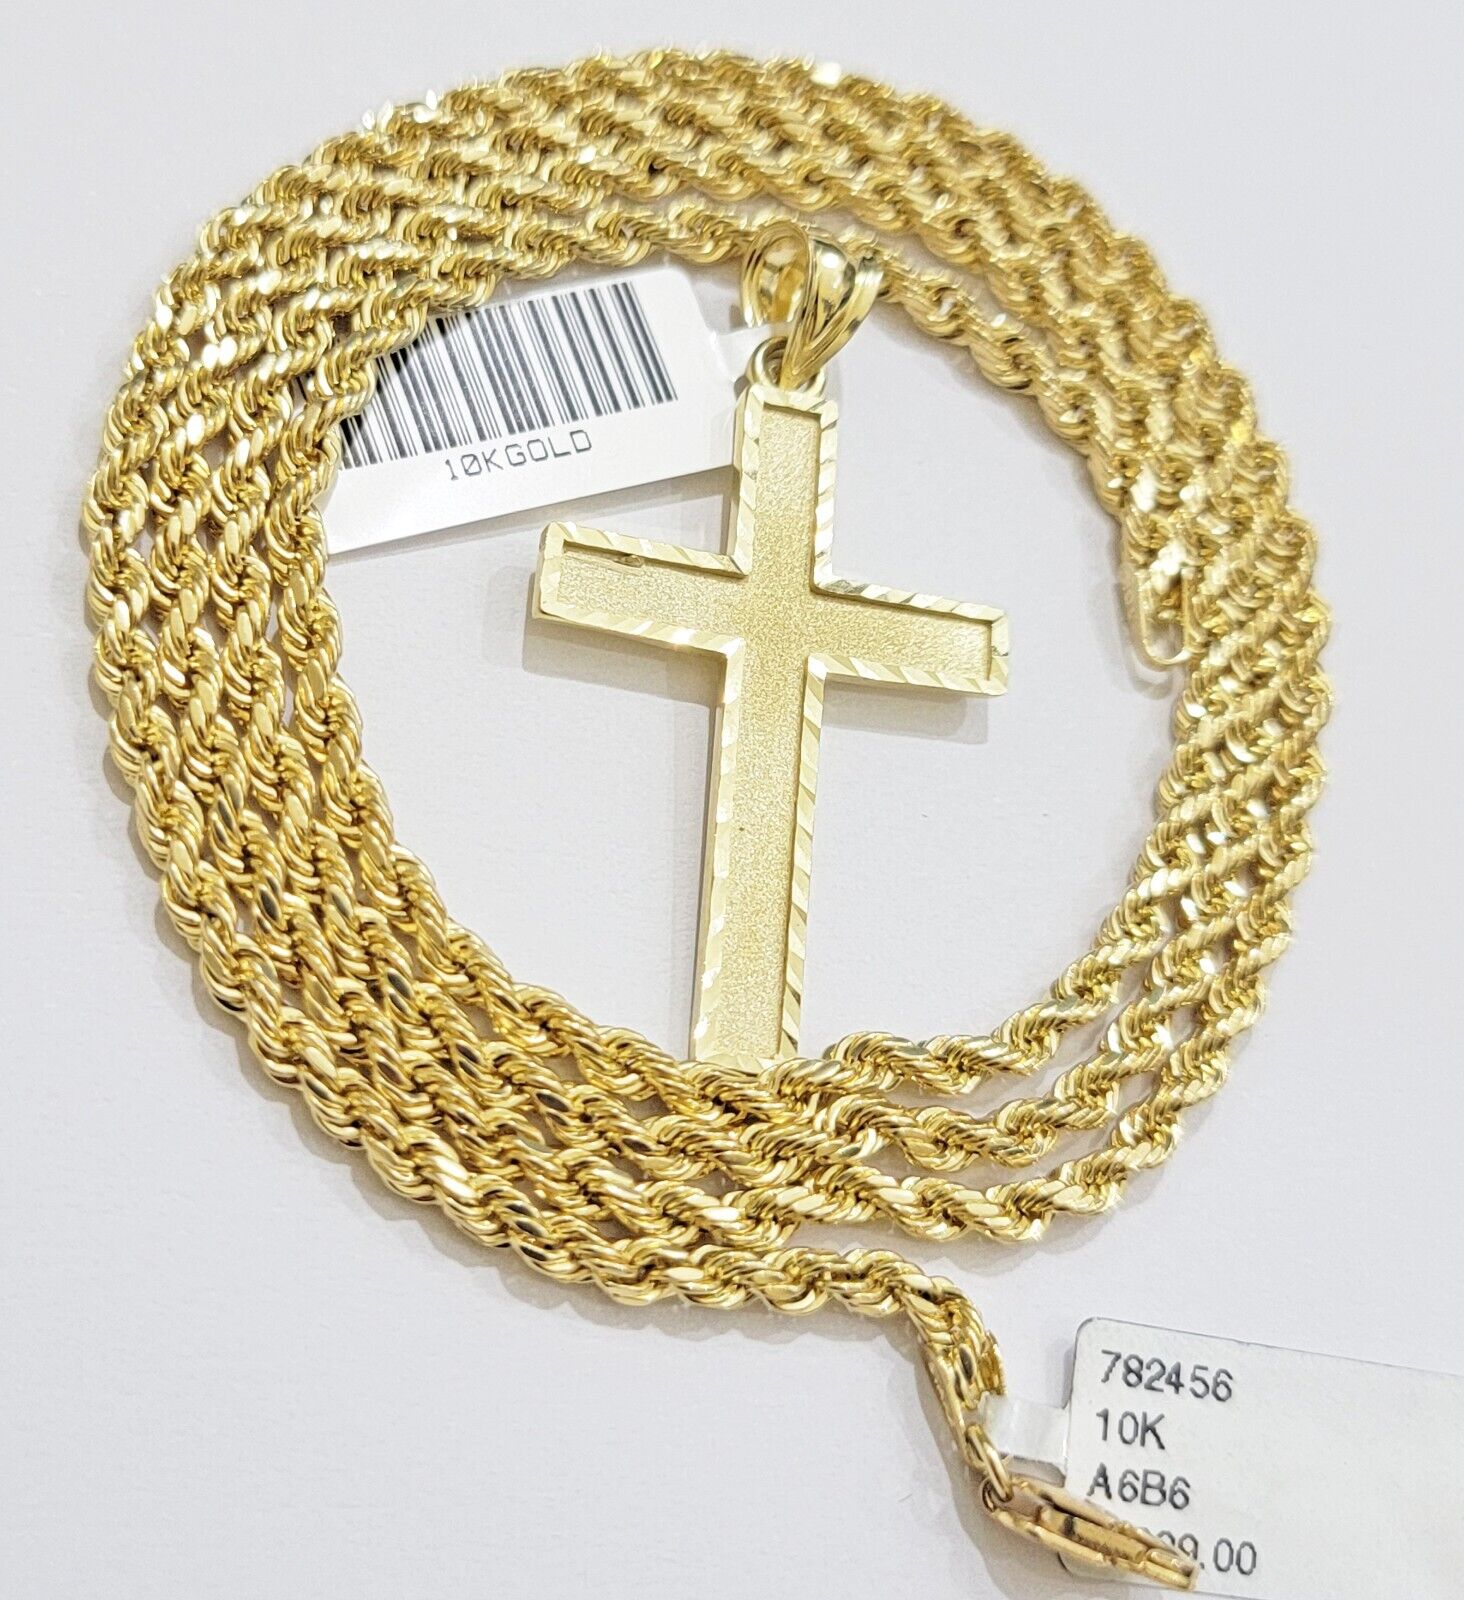 10k Gold Rope Chain Cross Charm Pendant Set 18